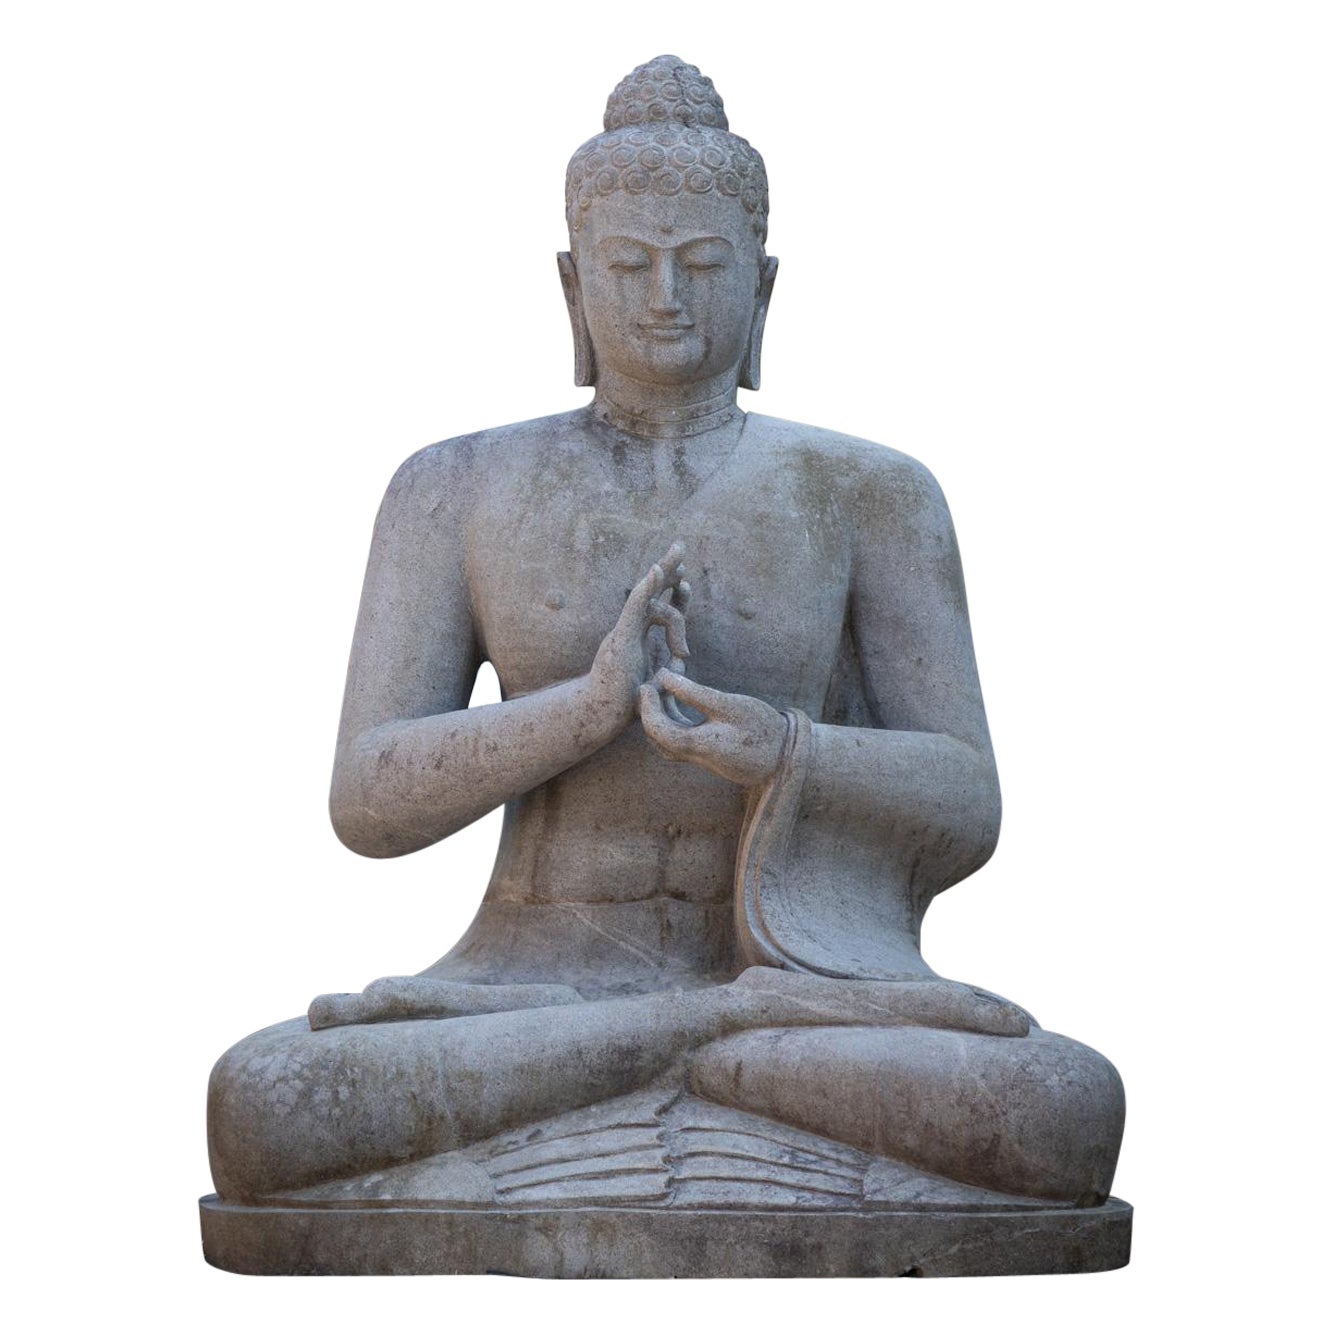 Mid-20th century very large and special lavastone Buddha statue  OriginalBuddha